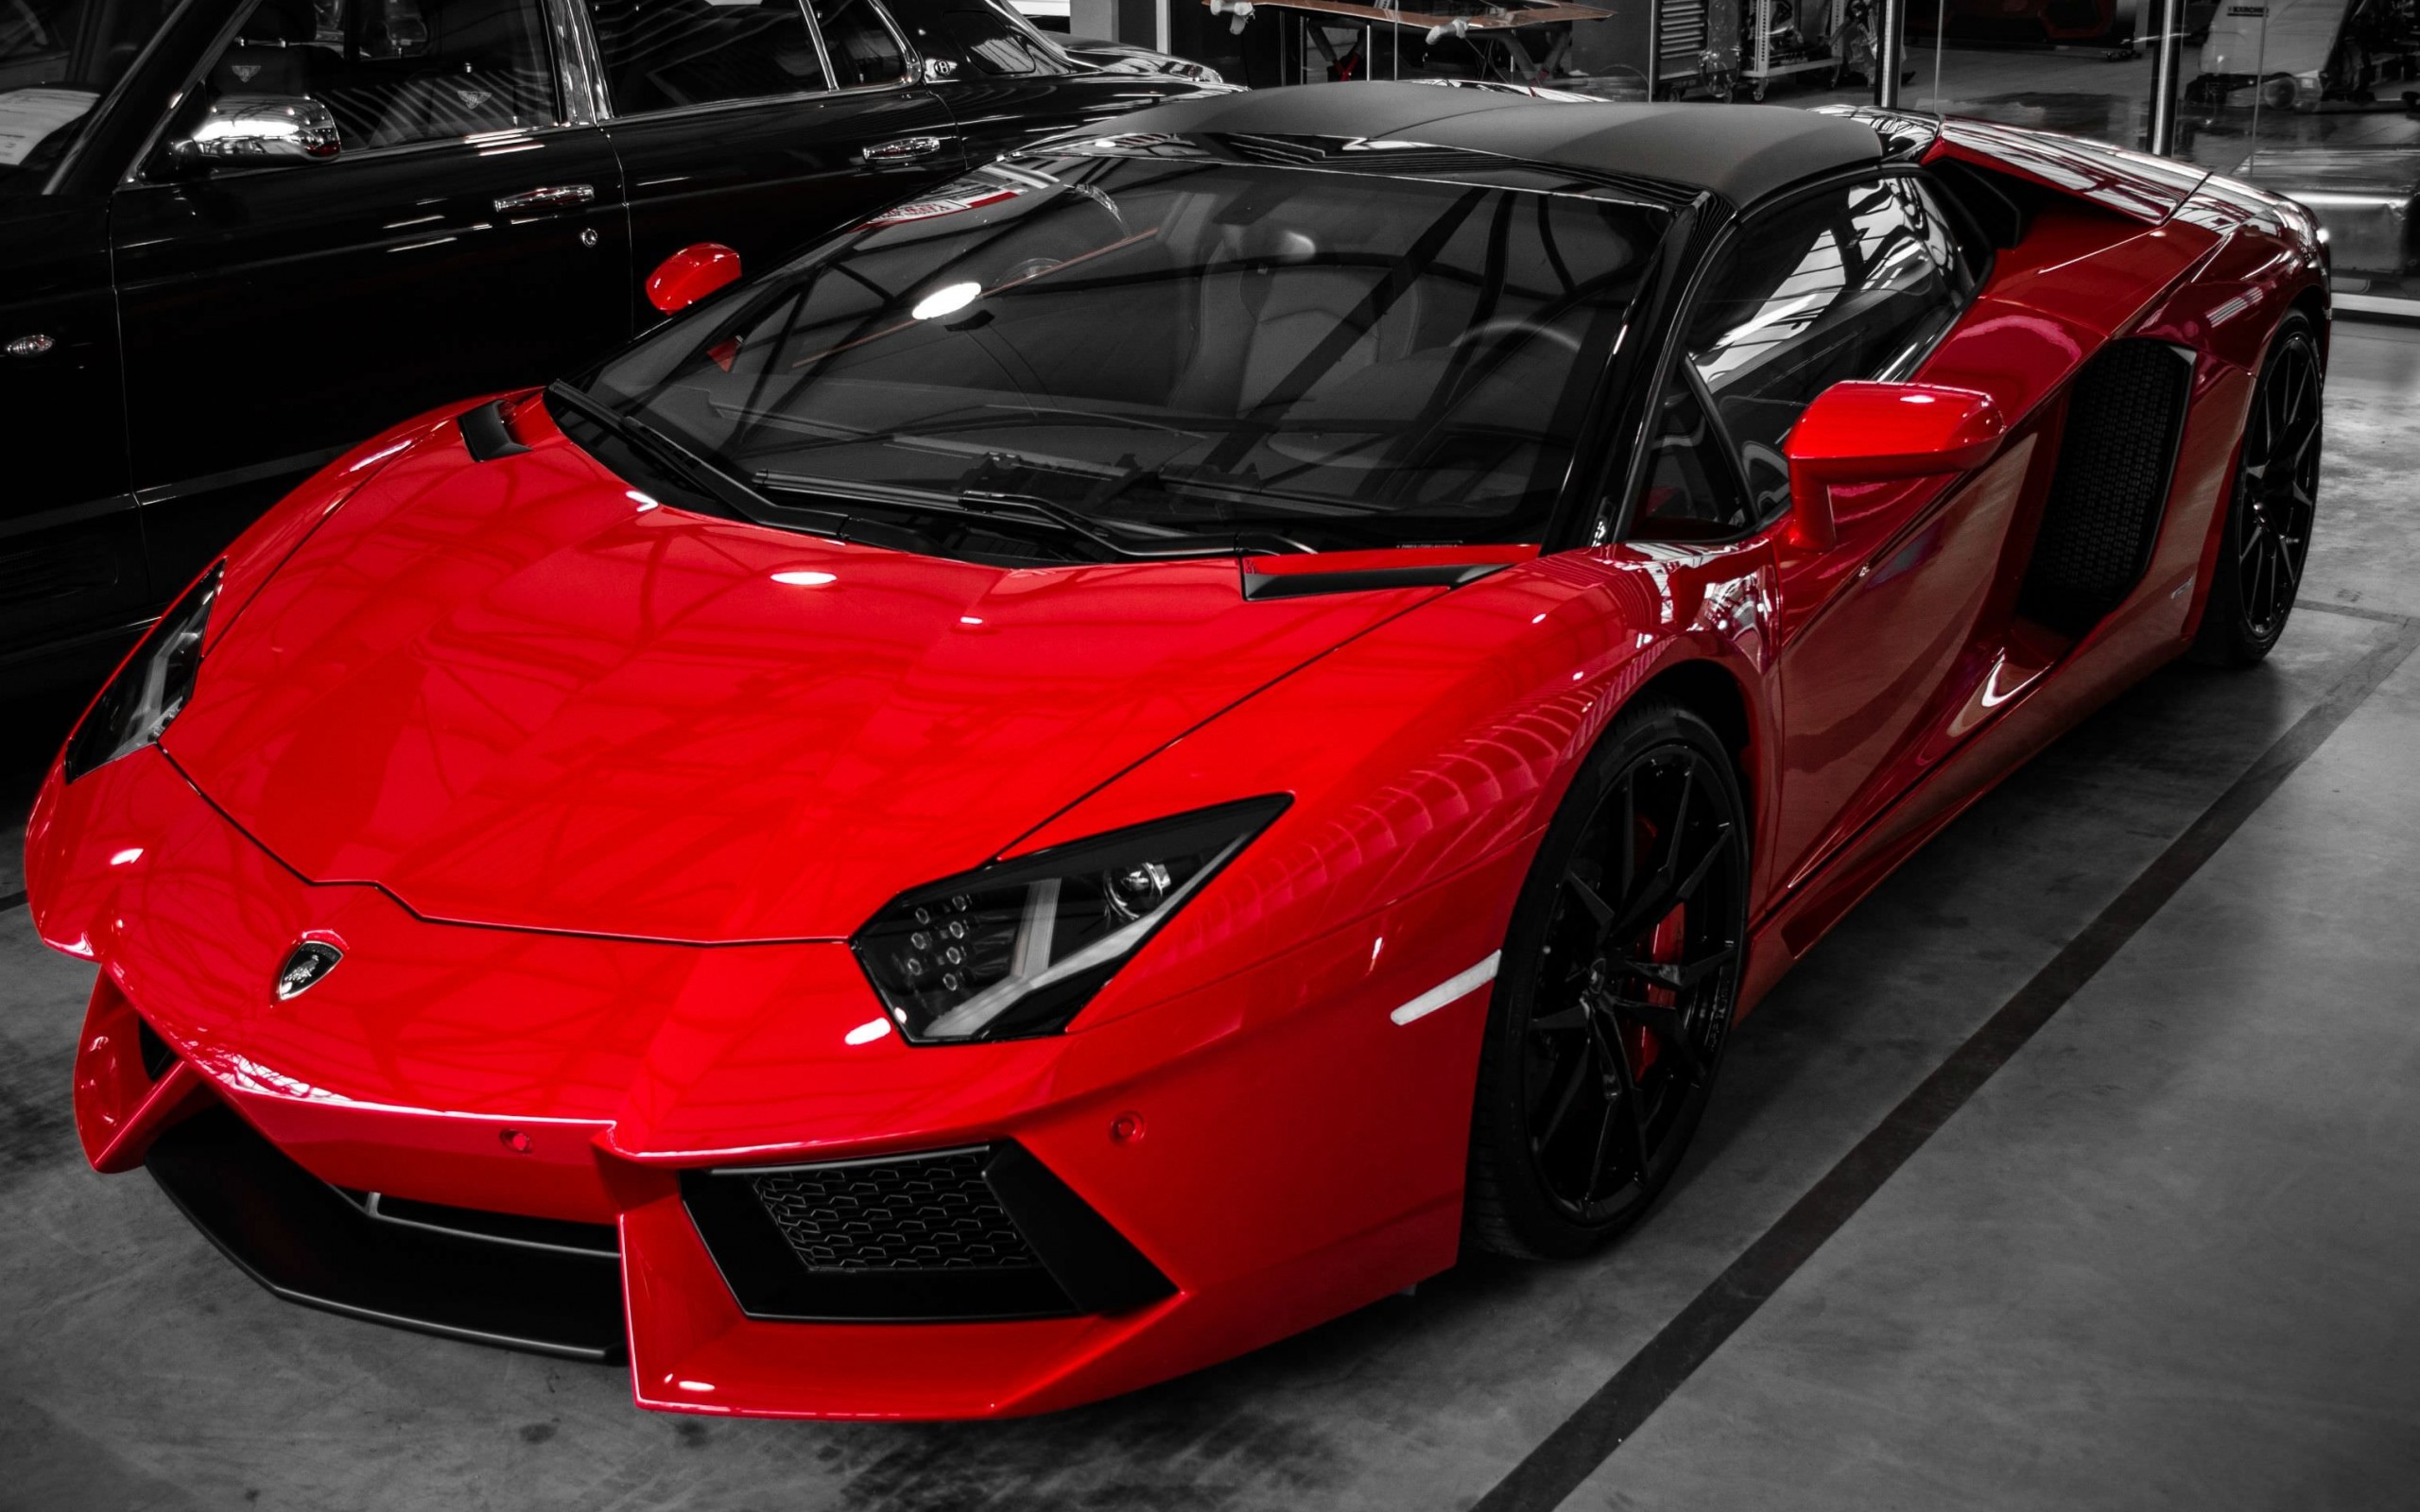 Red Lamborghini Aventador Wallpaper for Desktop 2560x1600